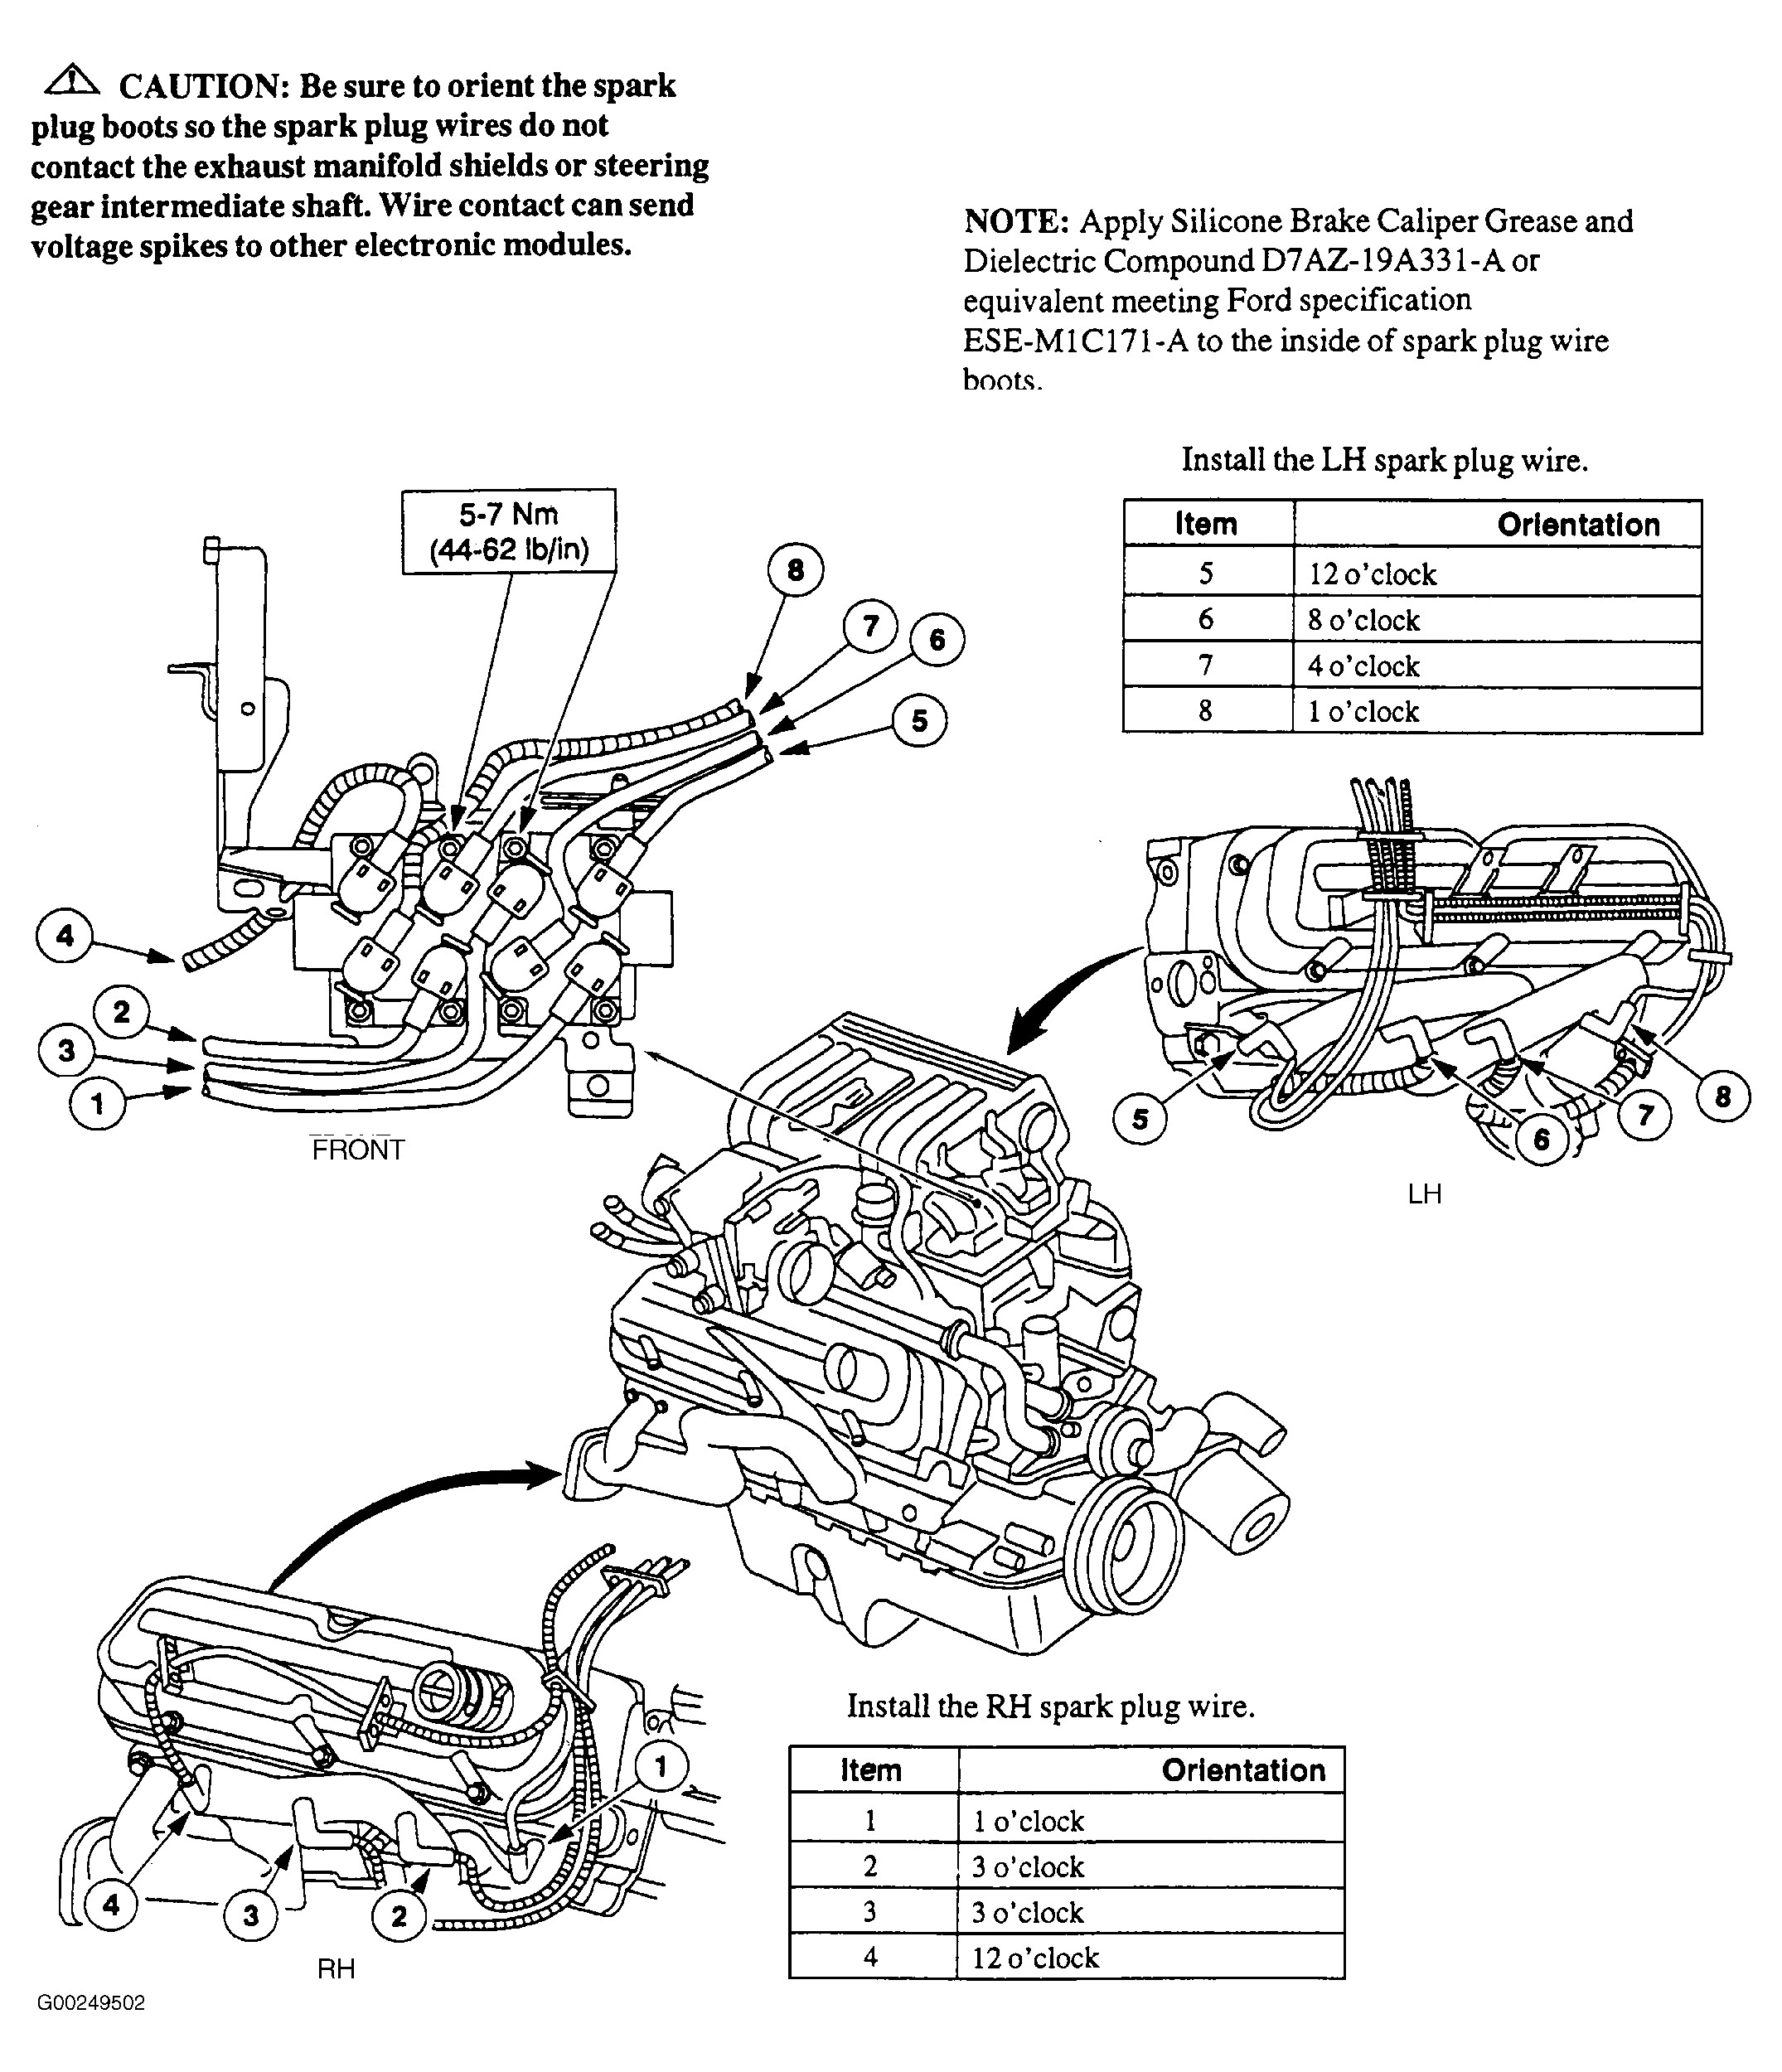 Ford 3 8 Engine Diagram Spark Plug Wire Diagram Wiring Diagrams Of Ford 3 8 Engine Diagram